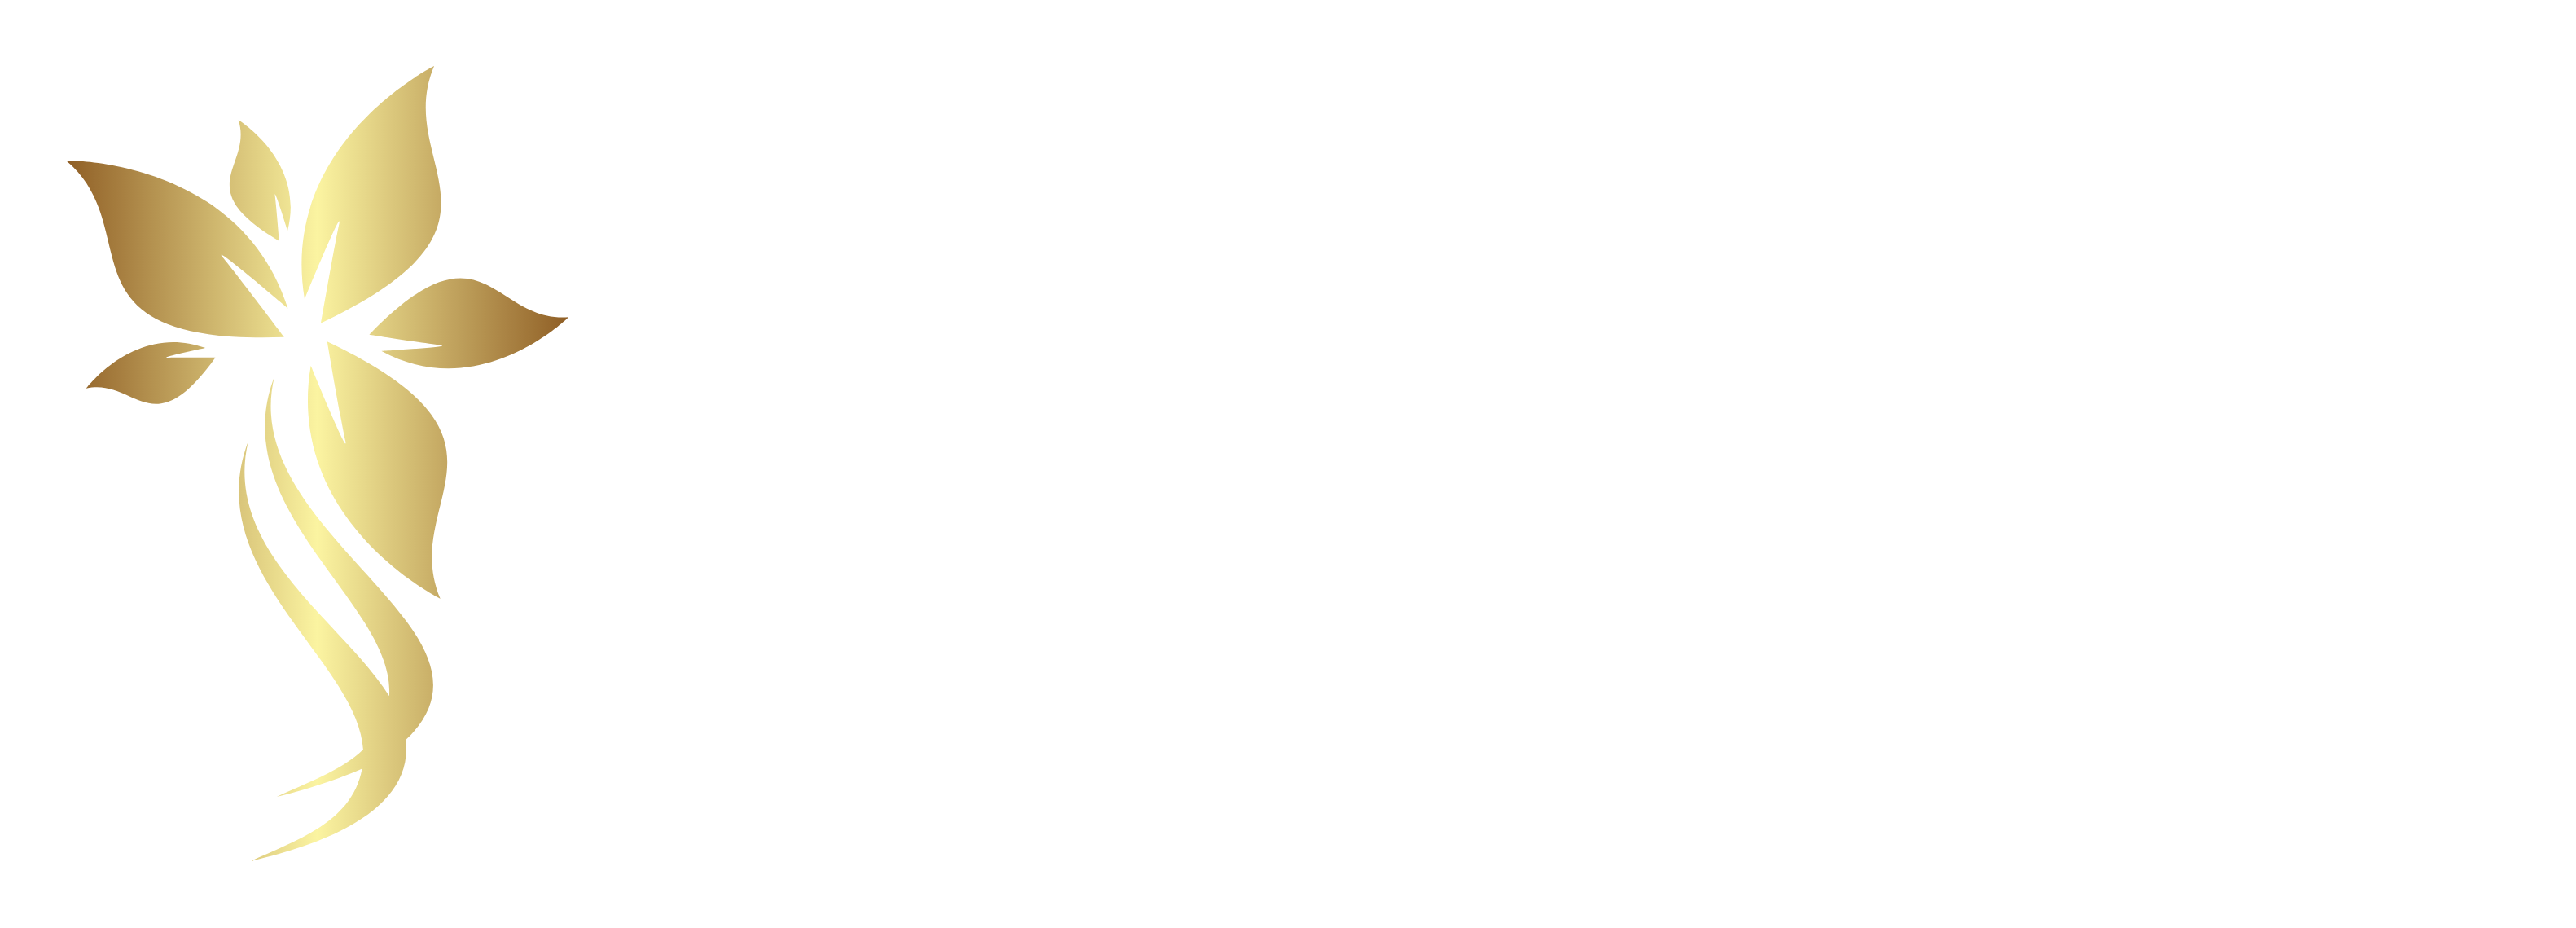 Provstgaard Beauty House